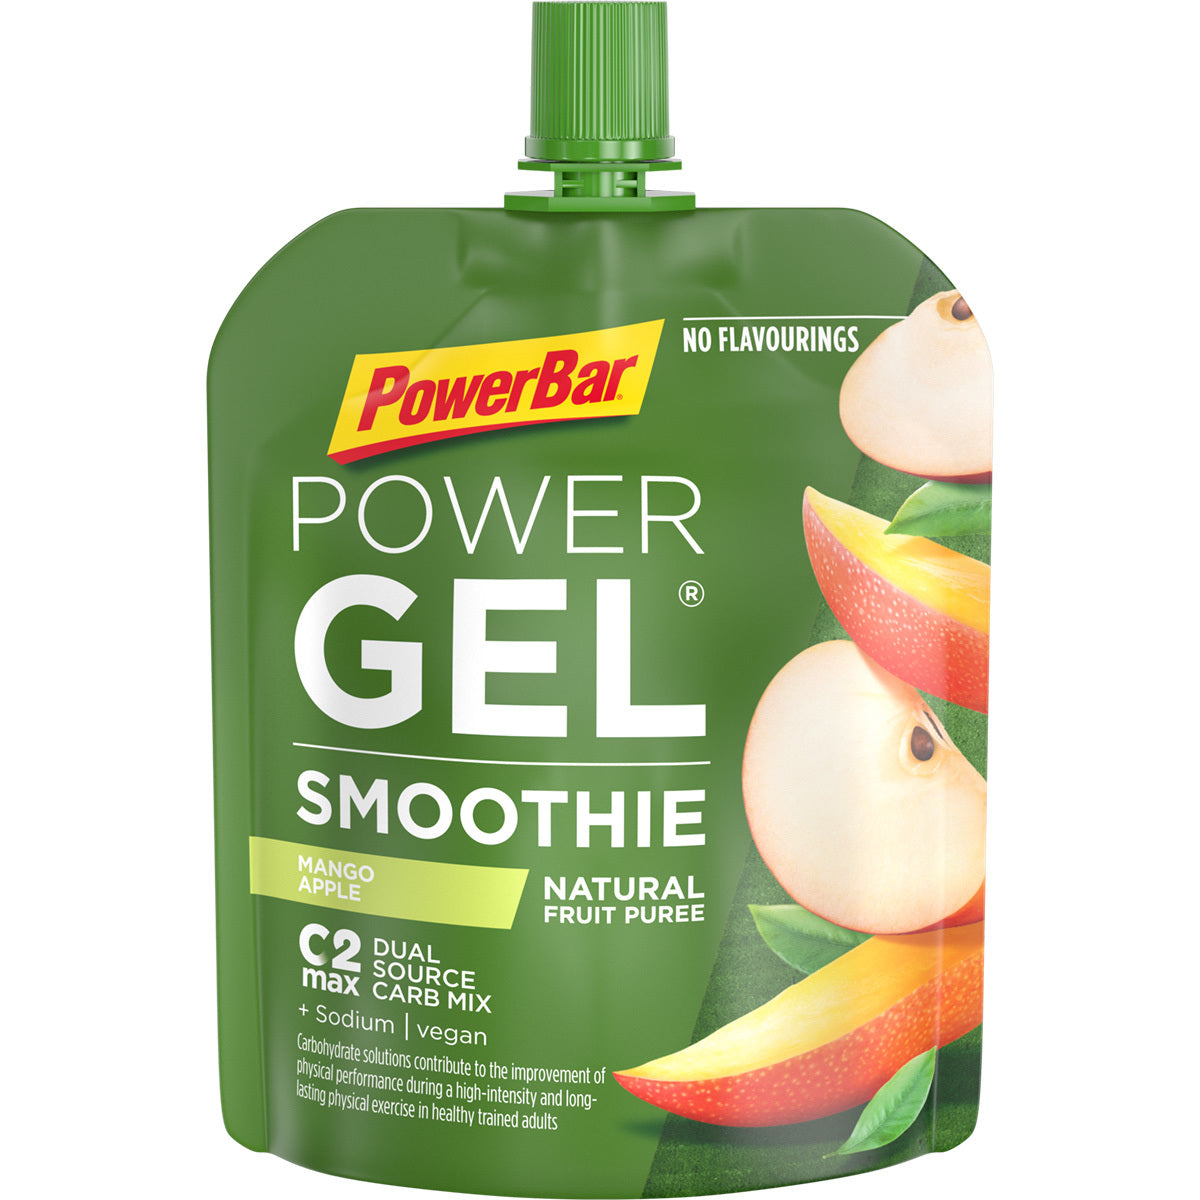 PowerBar Powergel Smoothie mango apple